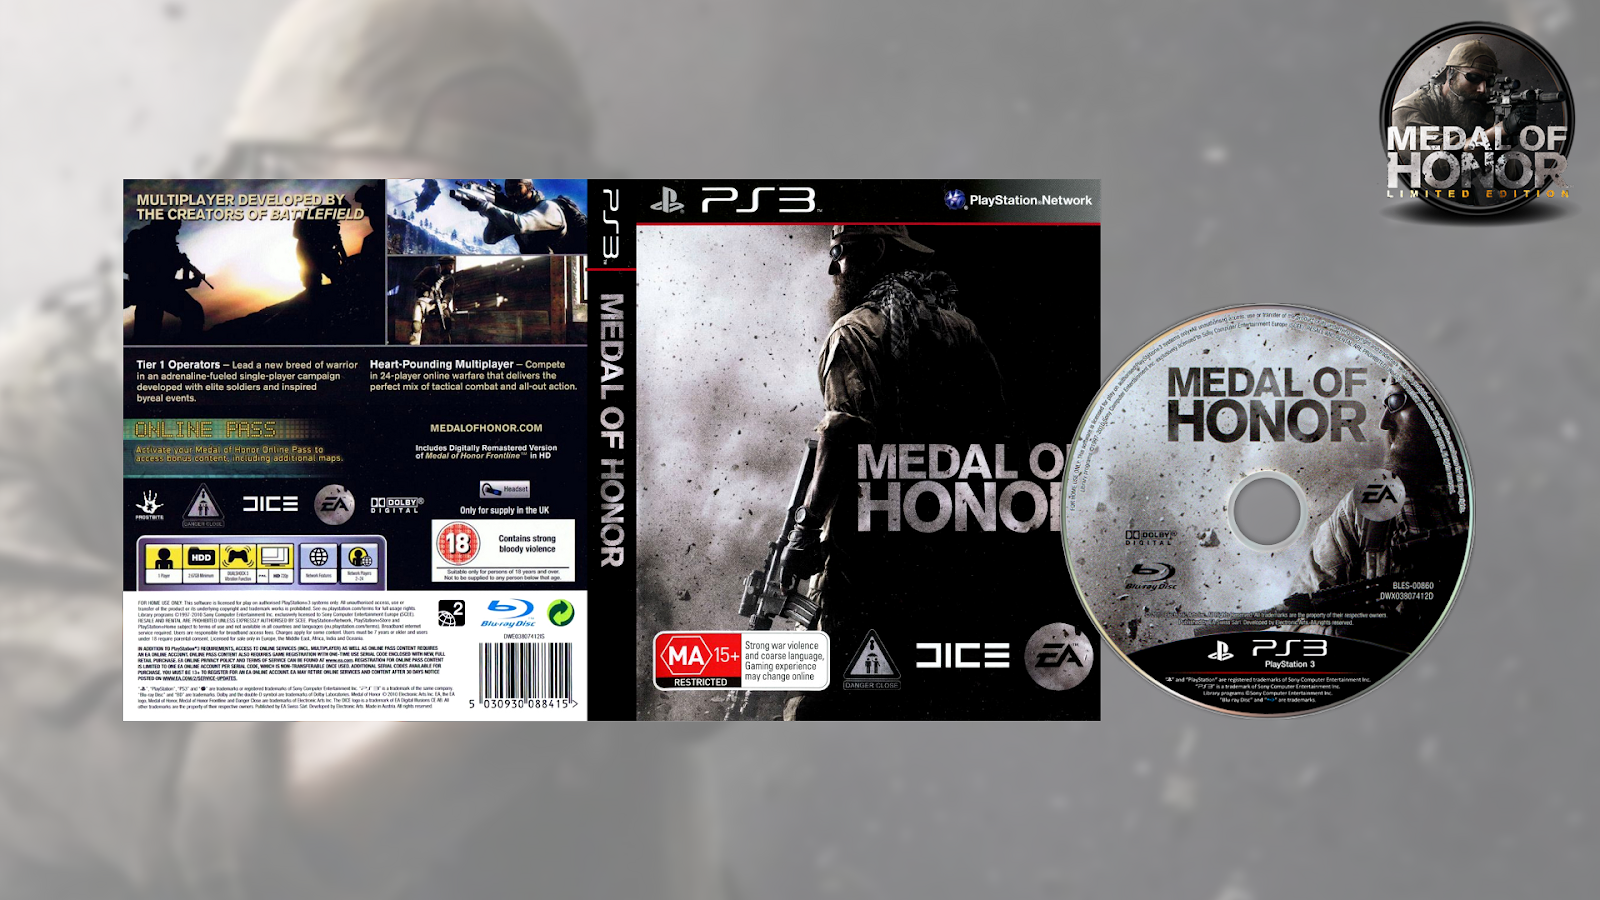 Medal of honor коды. Medal of Honor Limited Edition ps3. Medal of Honor 2010 диск. Medal of Honor ps3 обложка. Медаль за отвагу на ps3.